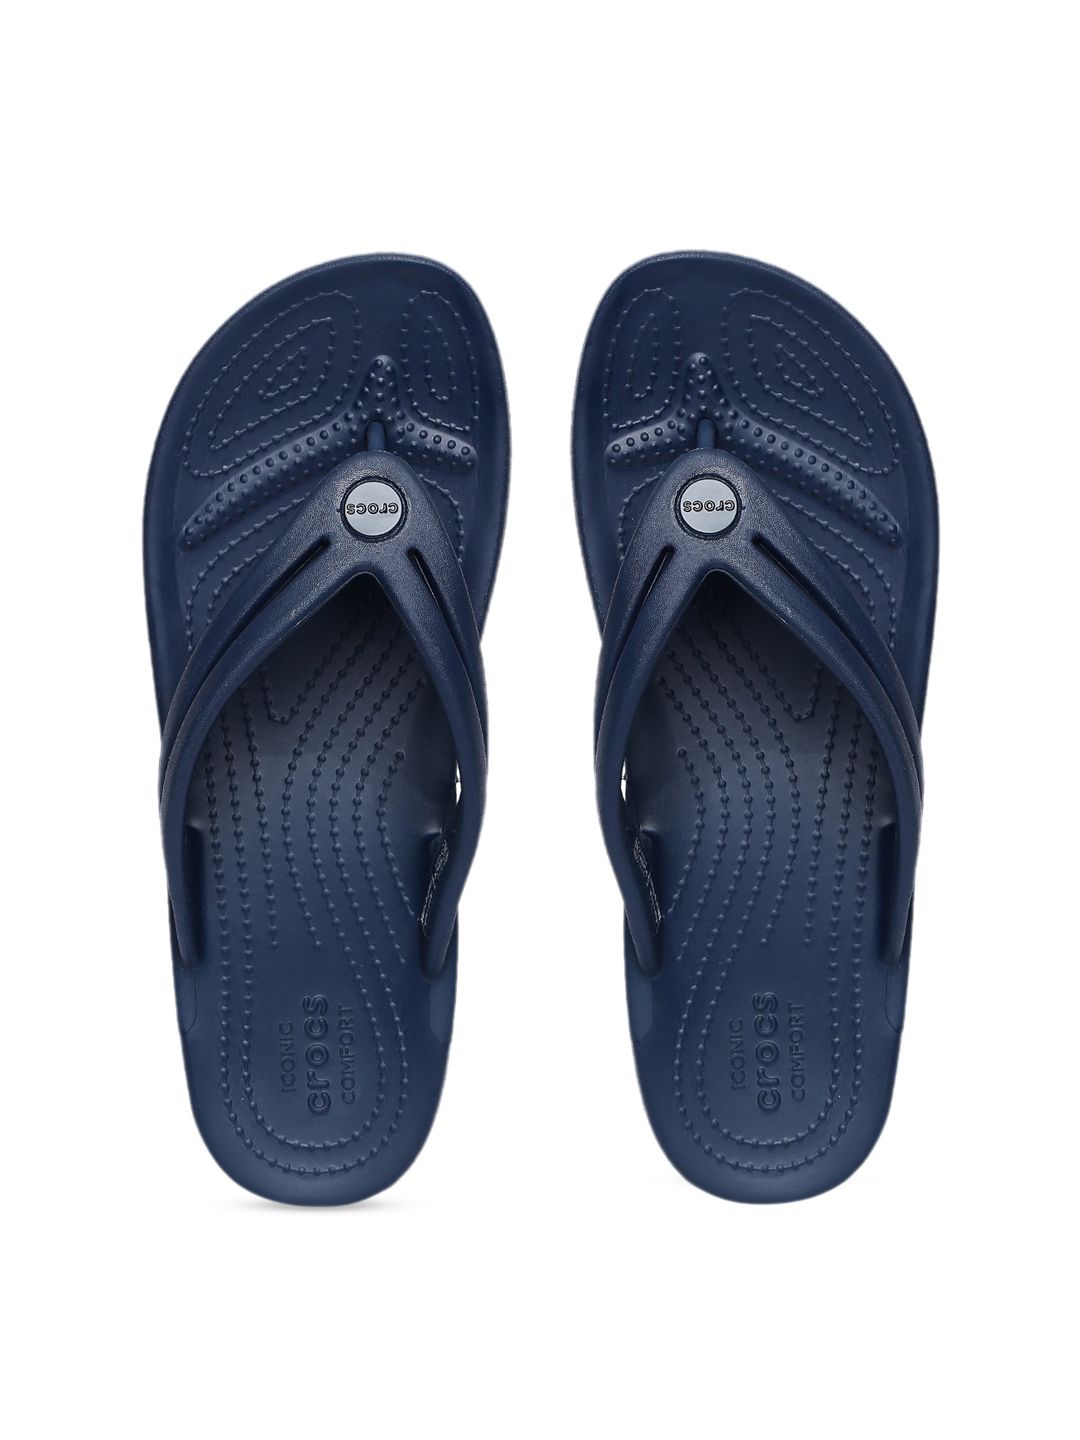 Crocs Crocband  Women Navy Blue Solid Thong Flip-Flops Price in India